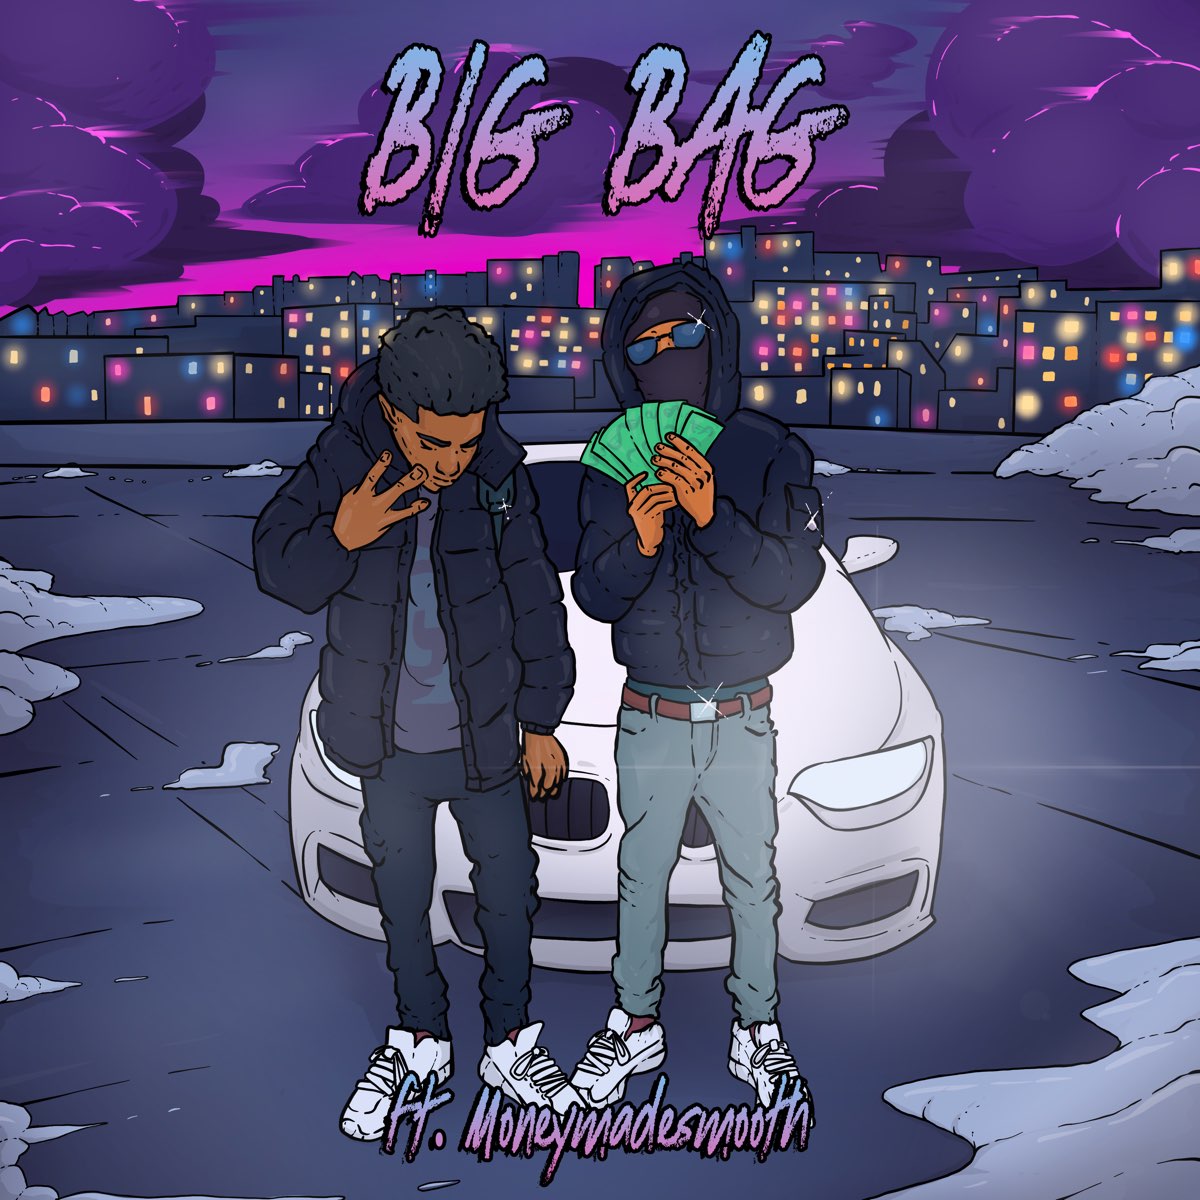 Big Bag (feat. Moneymadesmooth) - Single by Chris Ca$h on Apple Music